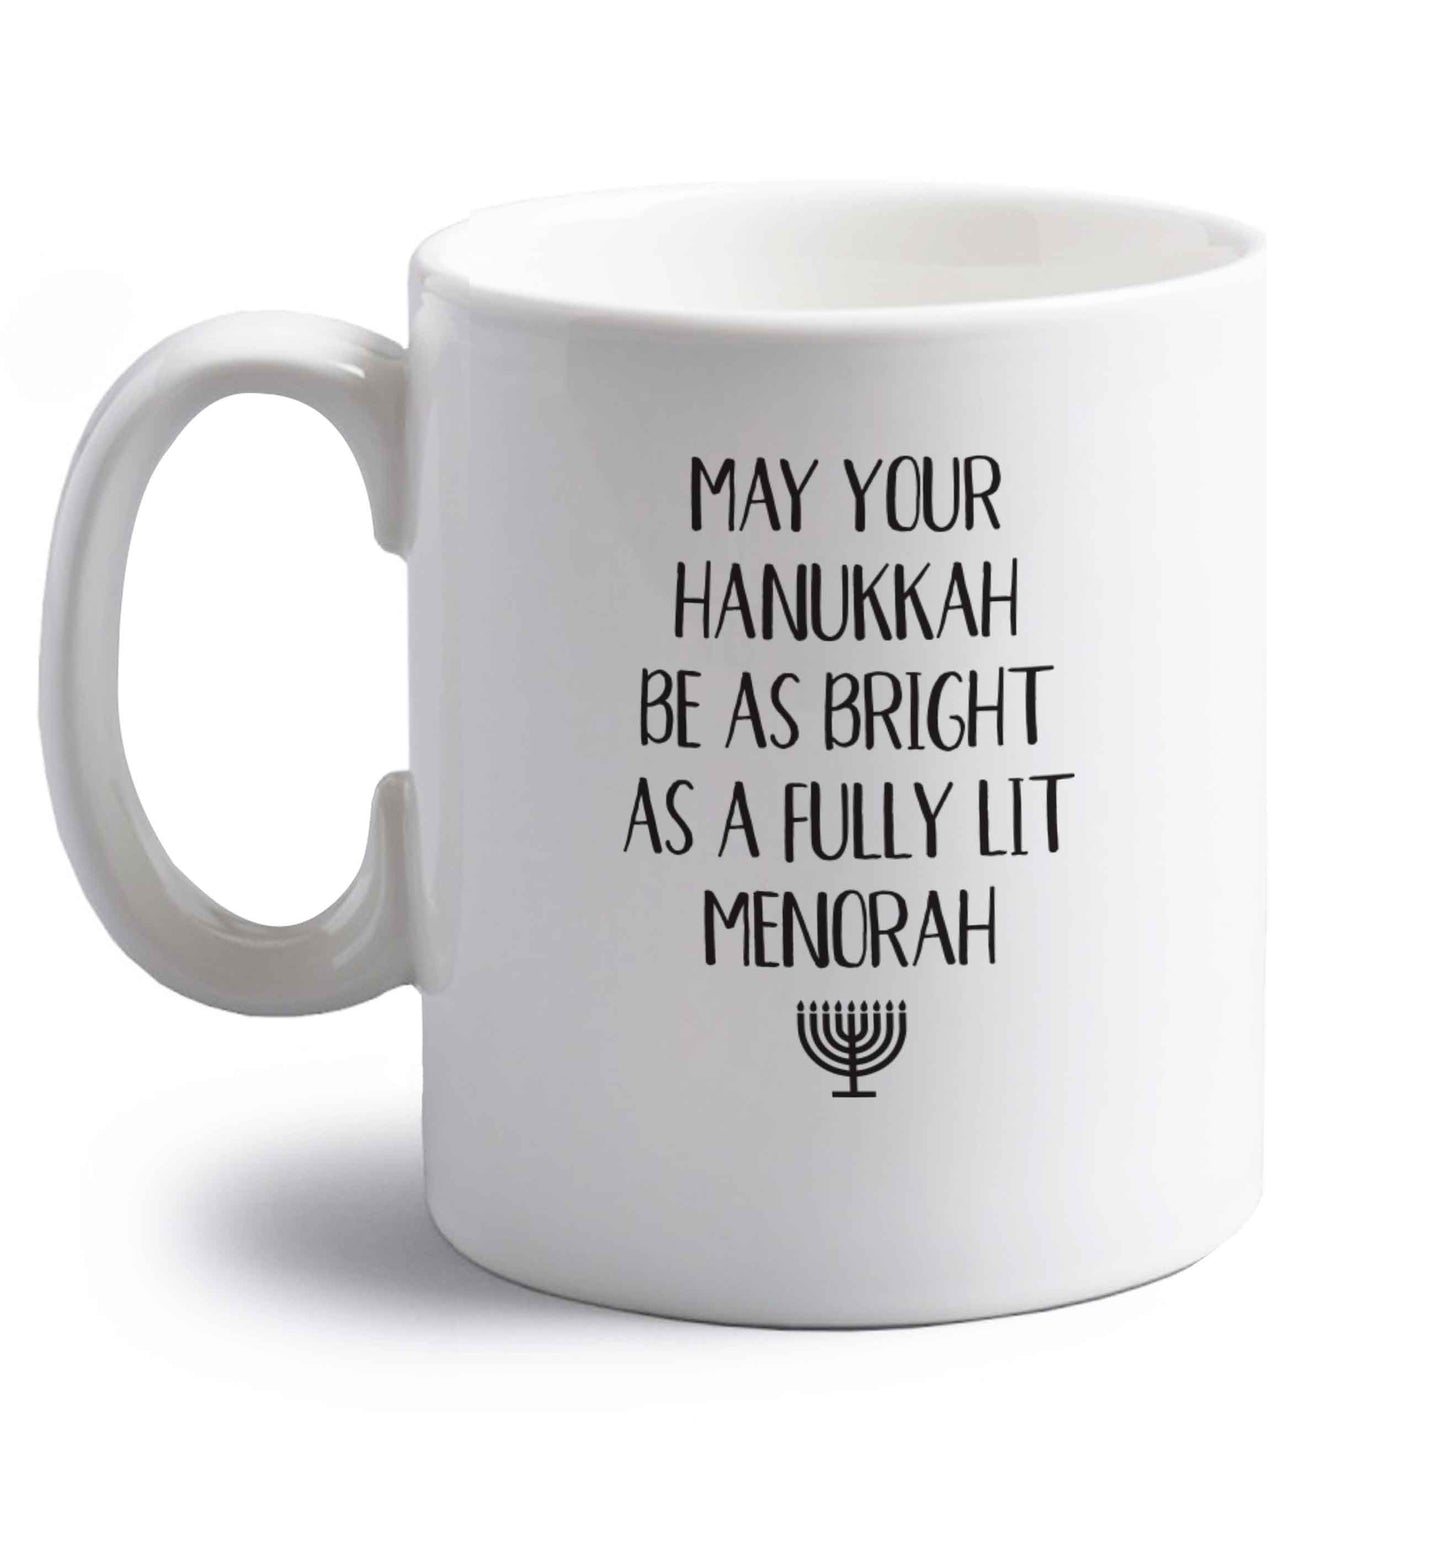 May your hanukkah be as bright as a fully lit menorah right handed white ceramic mug 